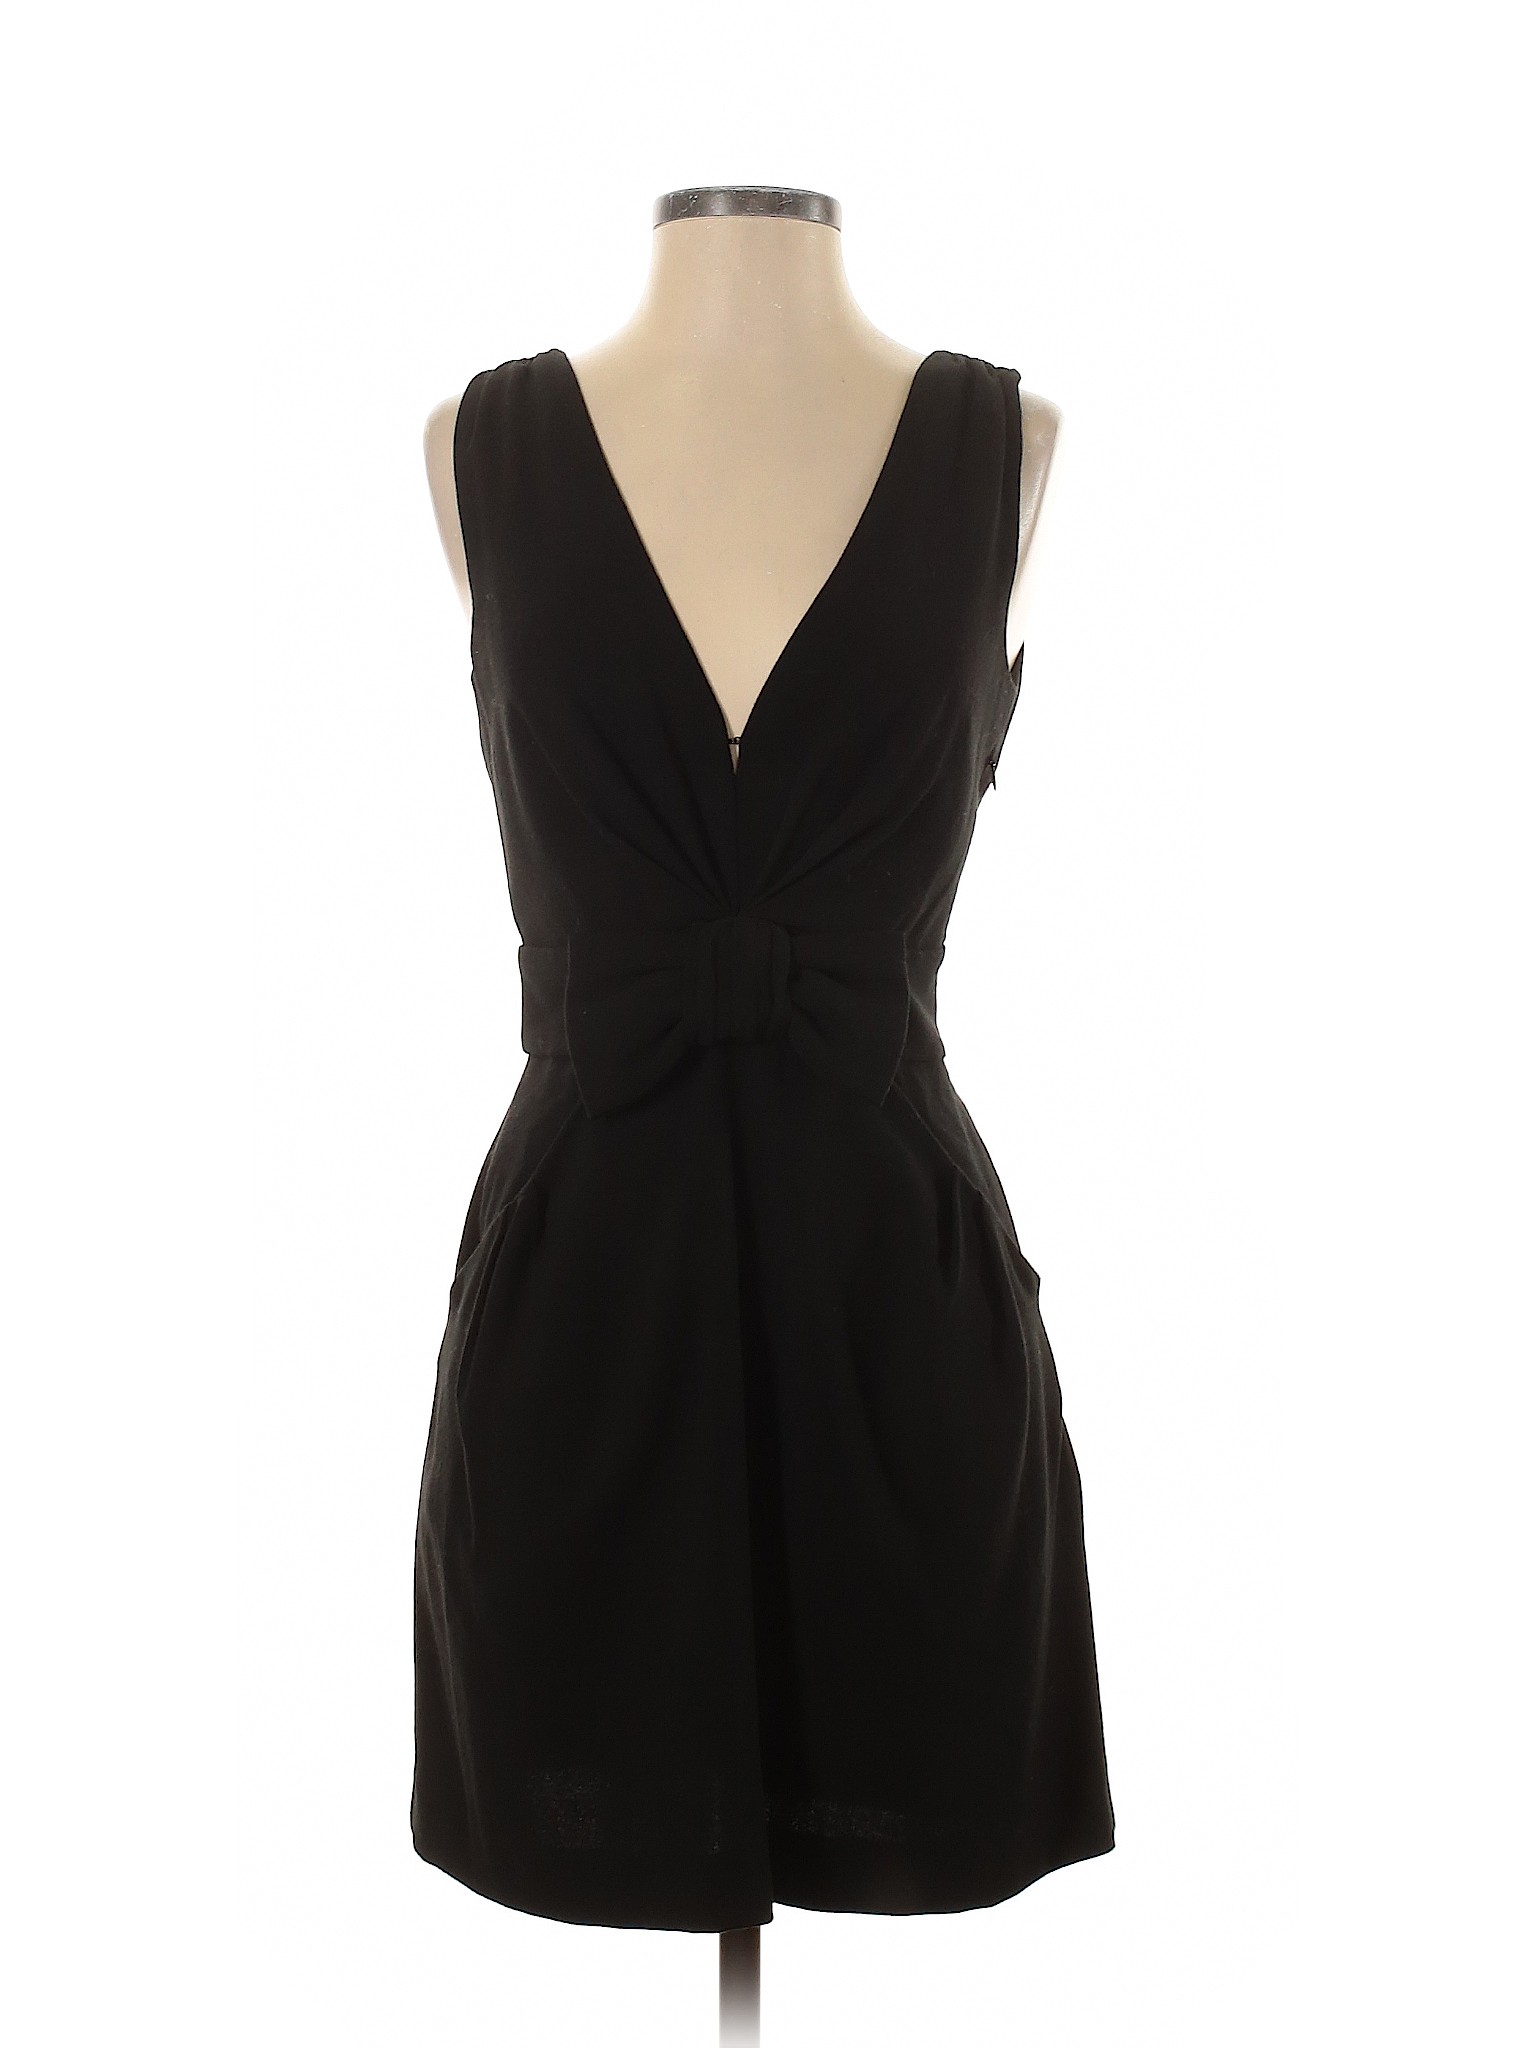 Claudie Pierlot Women Black Casual Dress 34 french | eBay